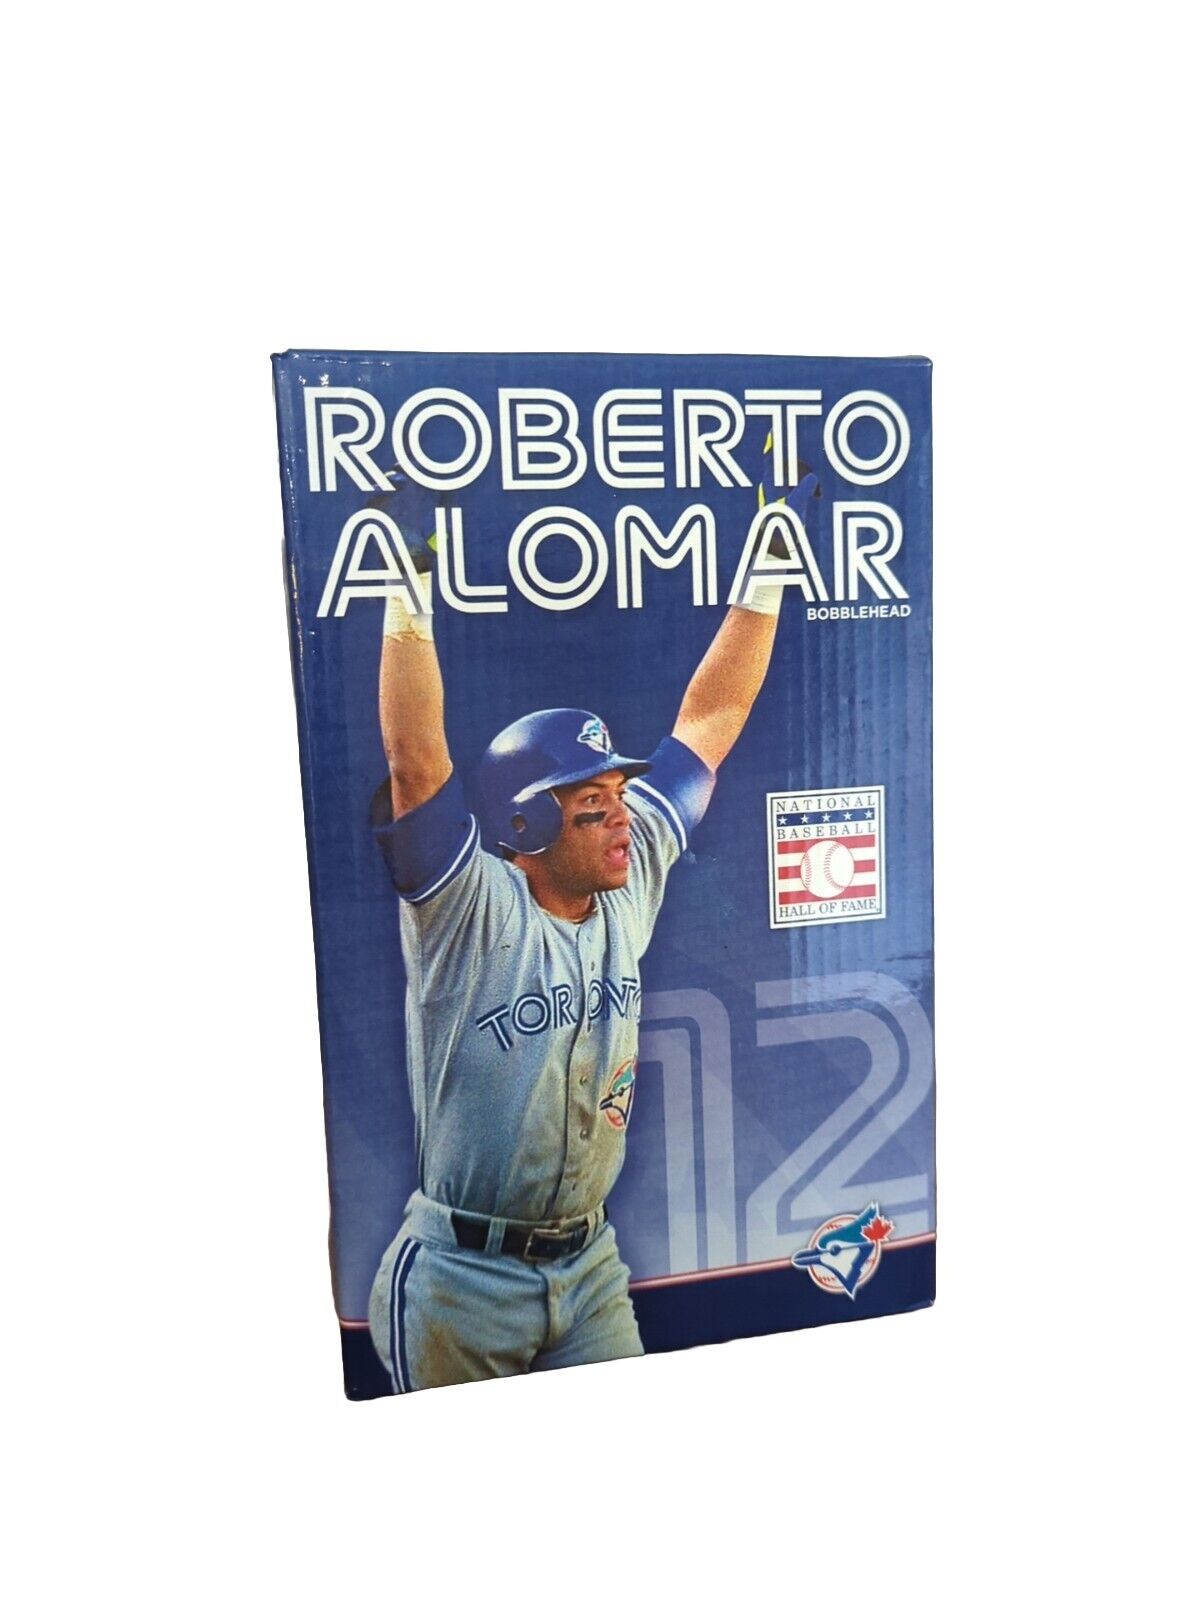 Roberto Alomar - Toronto Blue Jays Bobblehead (MLB Hall of Fame)